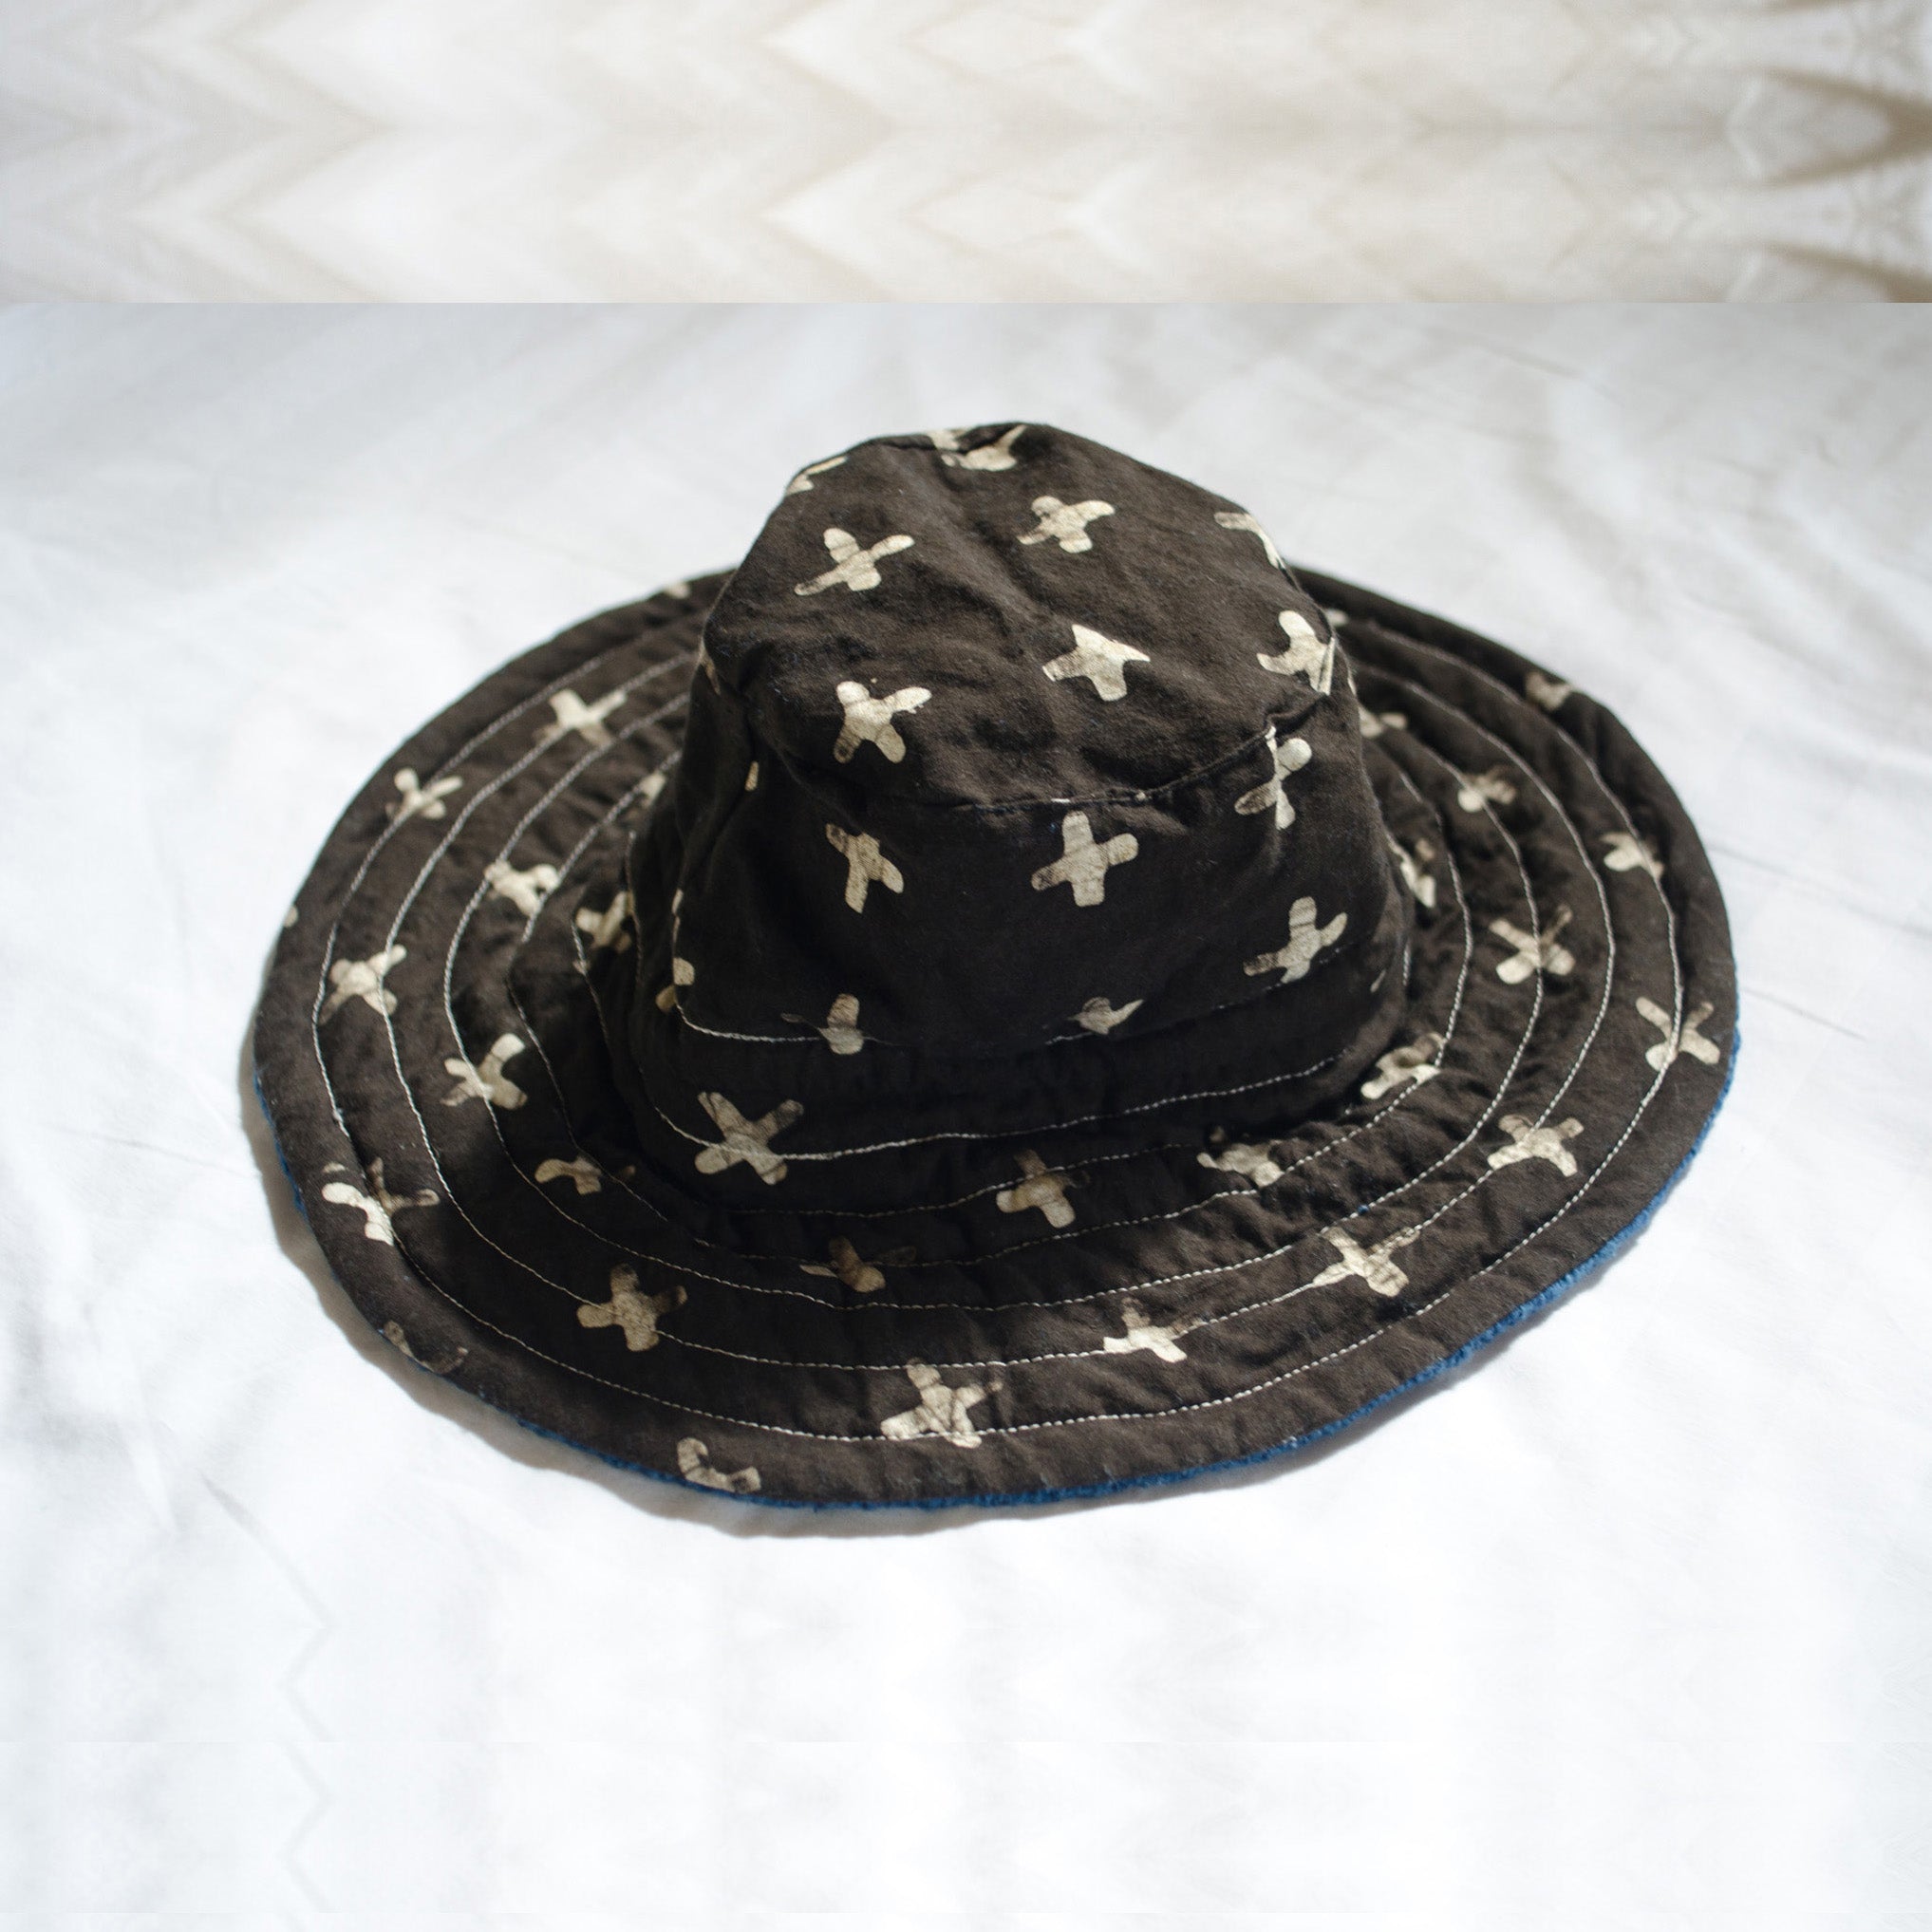 Indigo Ocean Safe Passage Bucket Hat (Stock)